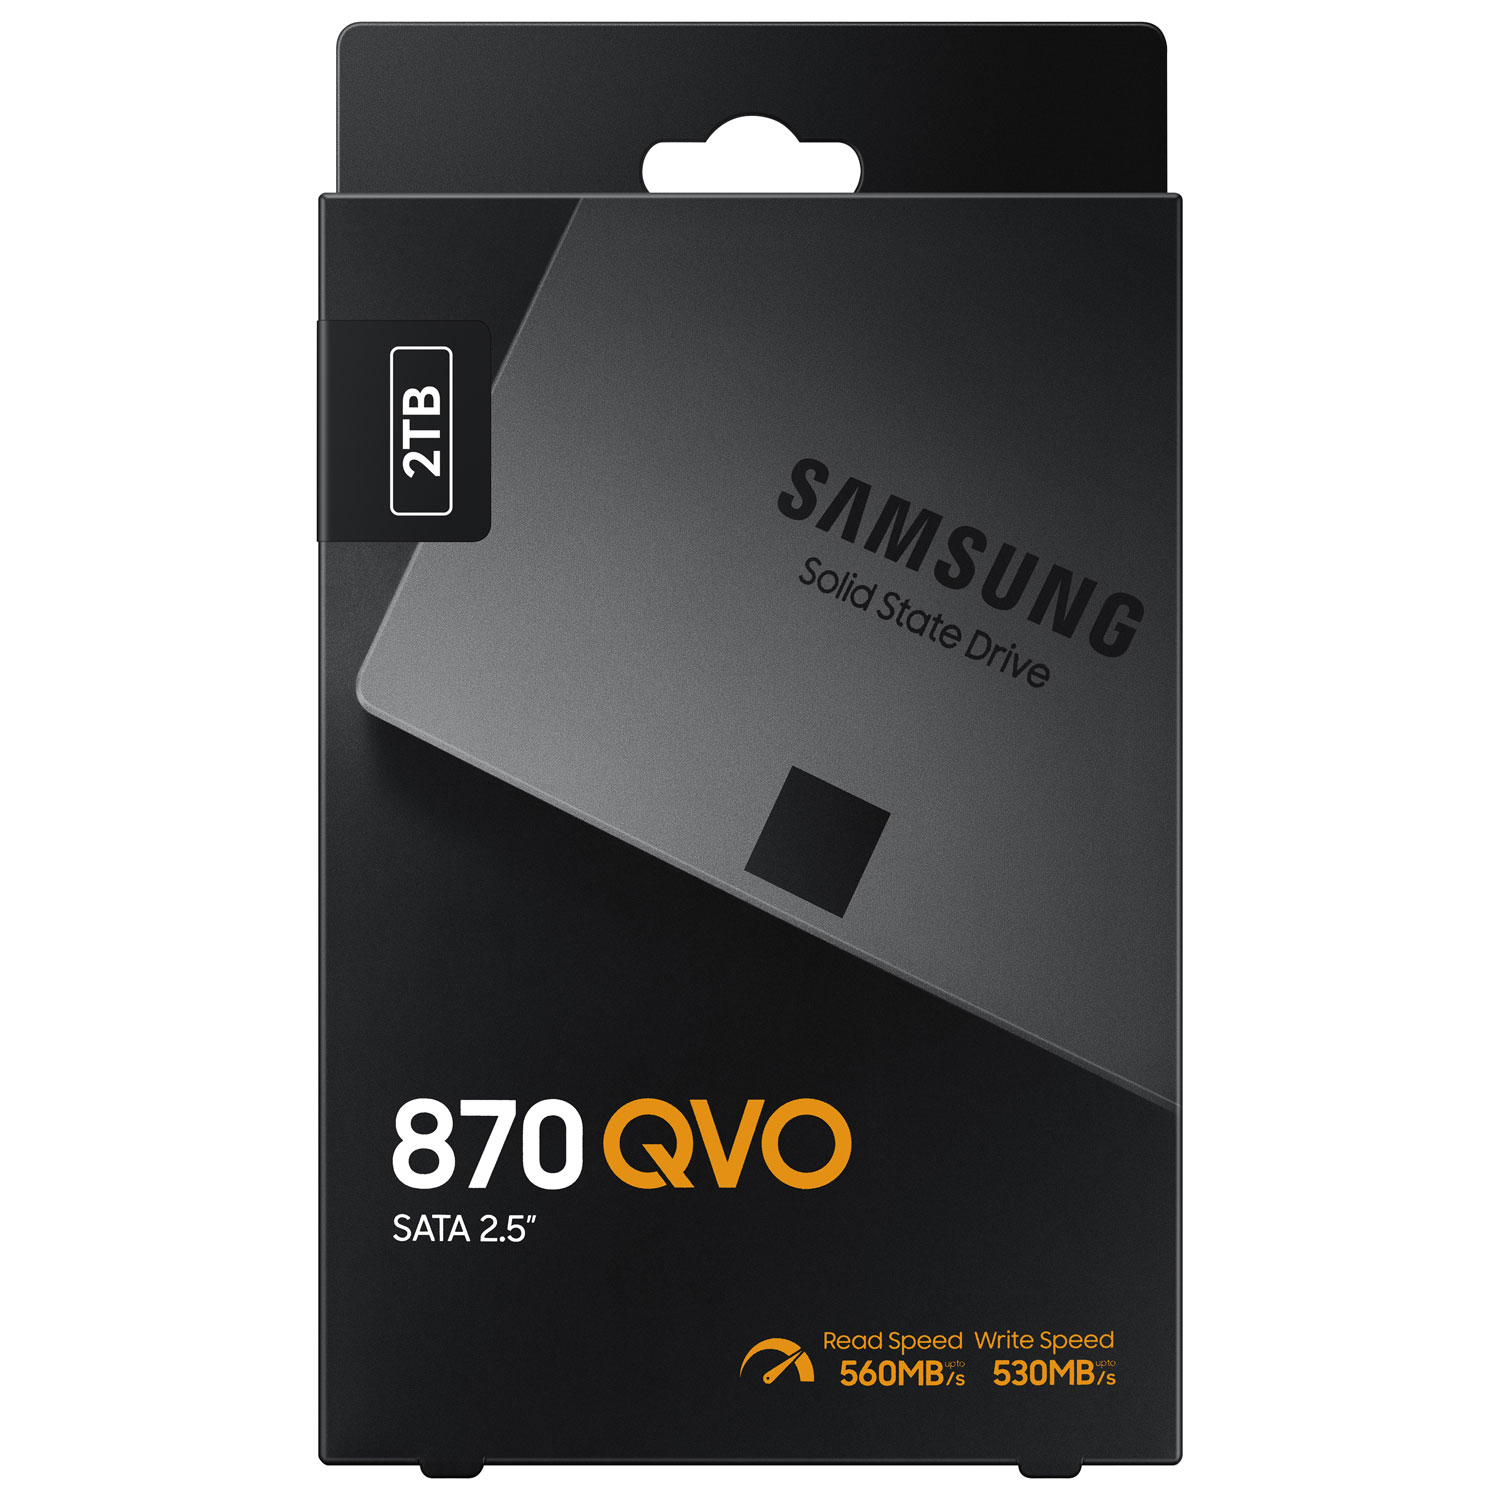 Samsung 870 QVO 2TB SATA III Internal Solid State Drive (MZ